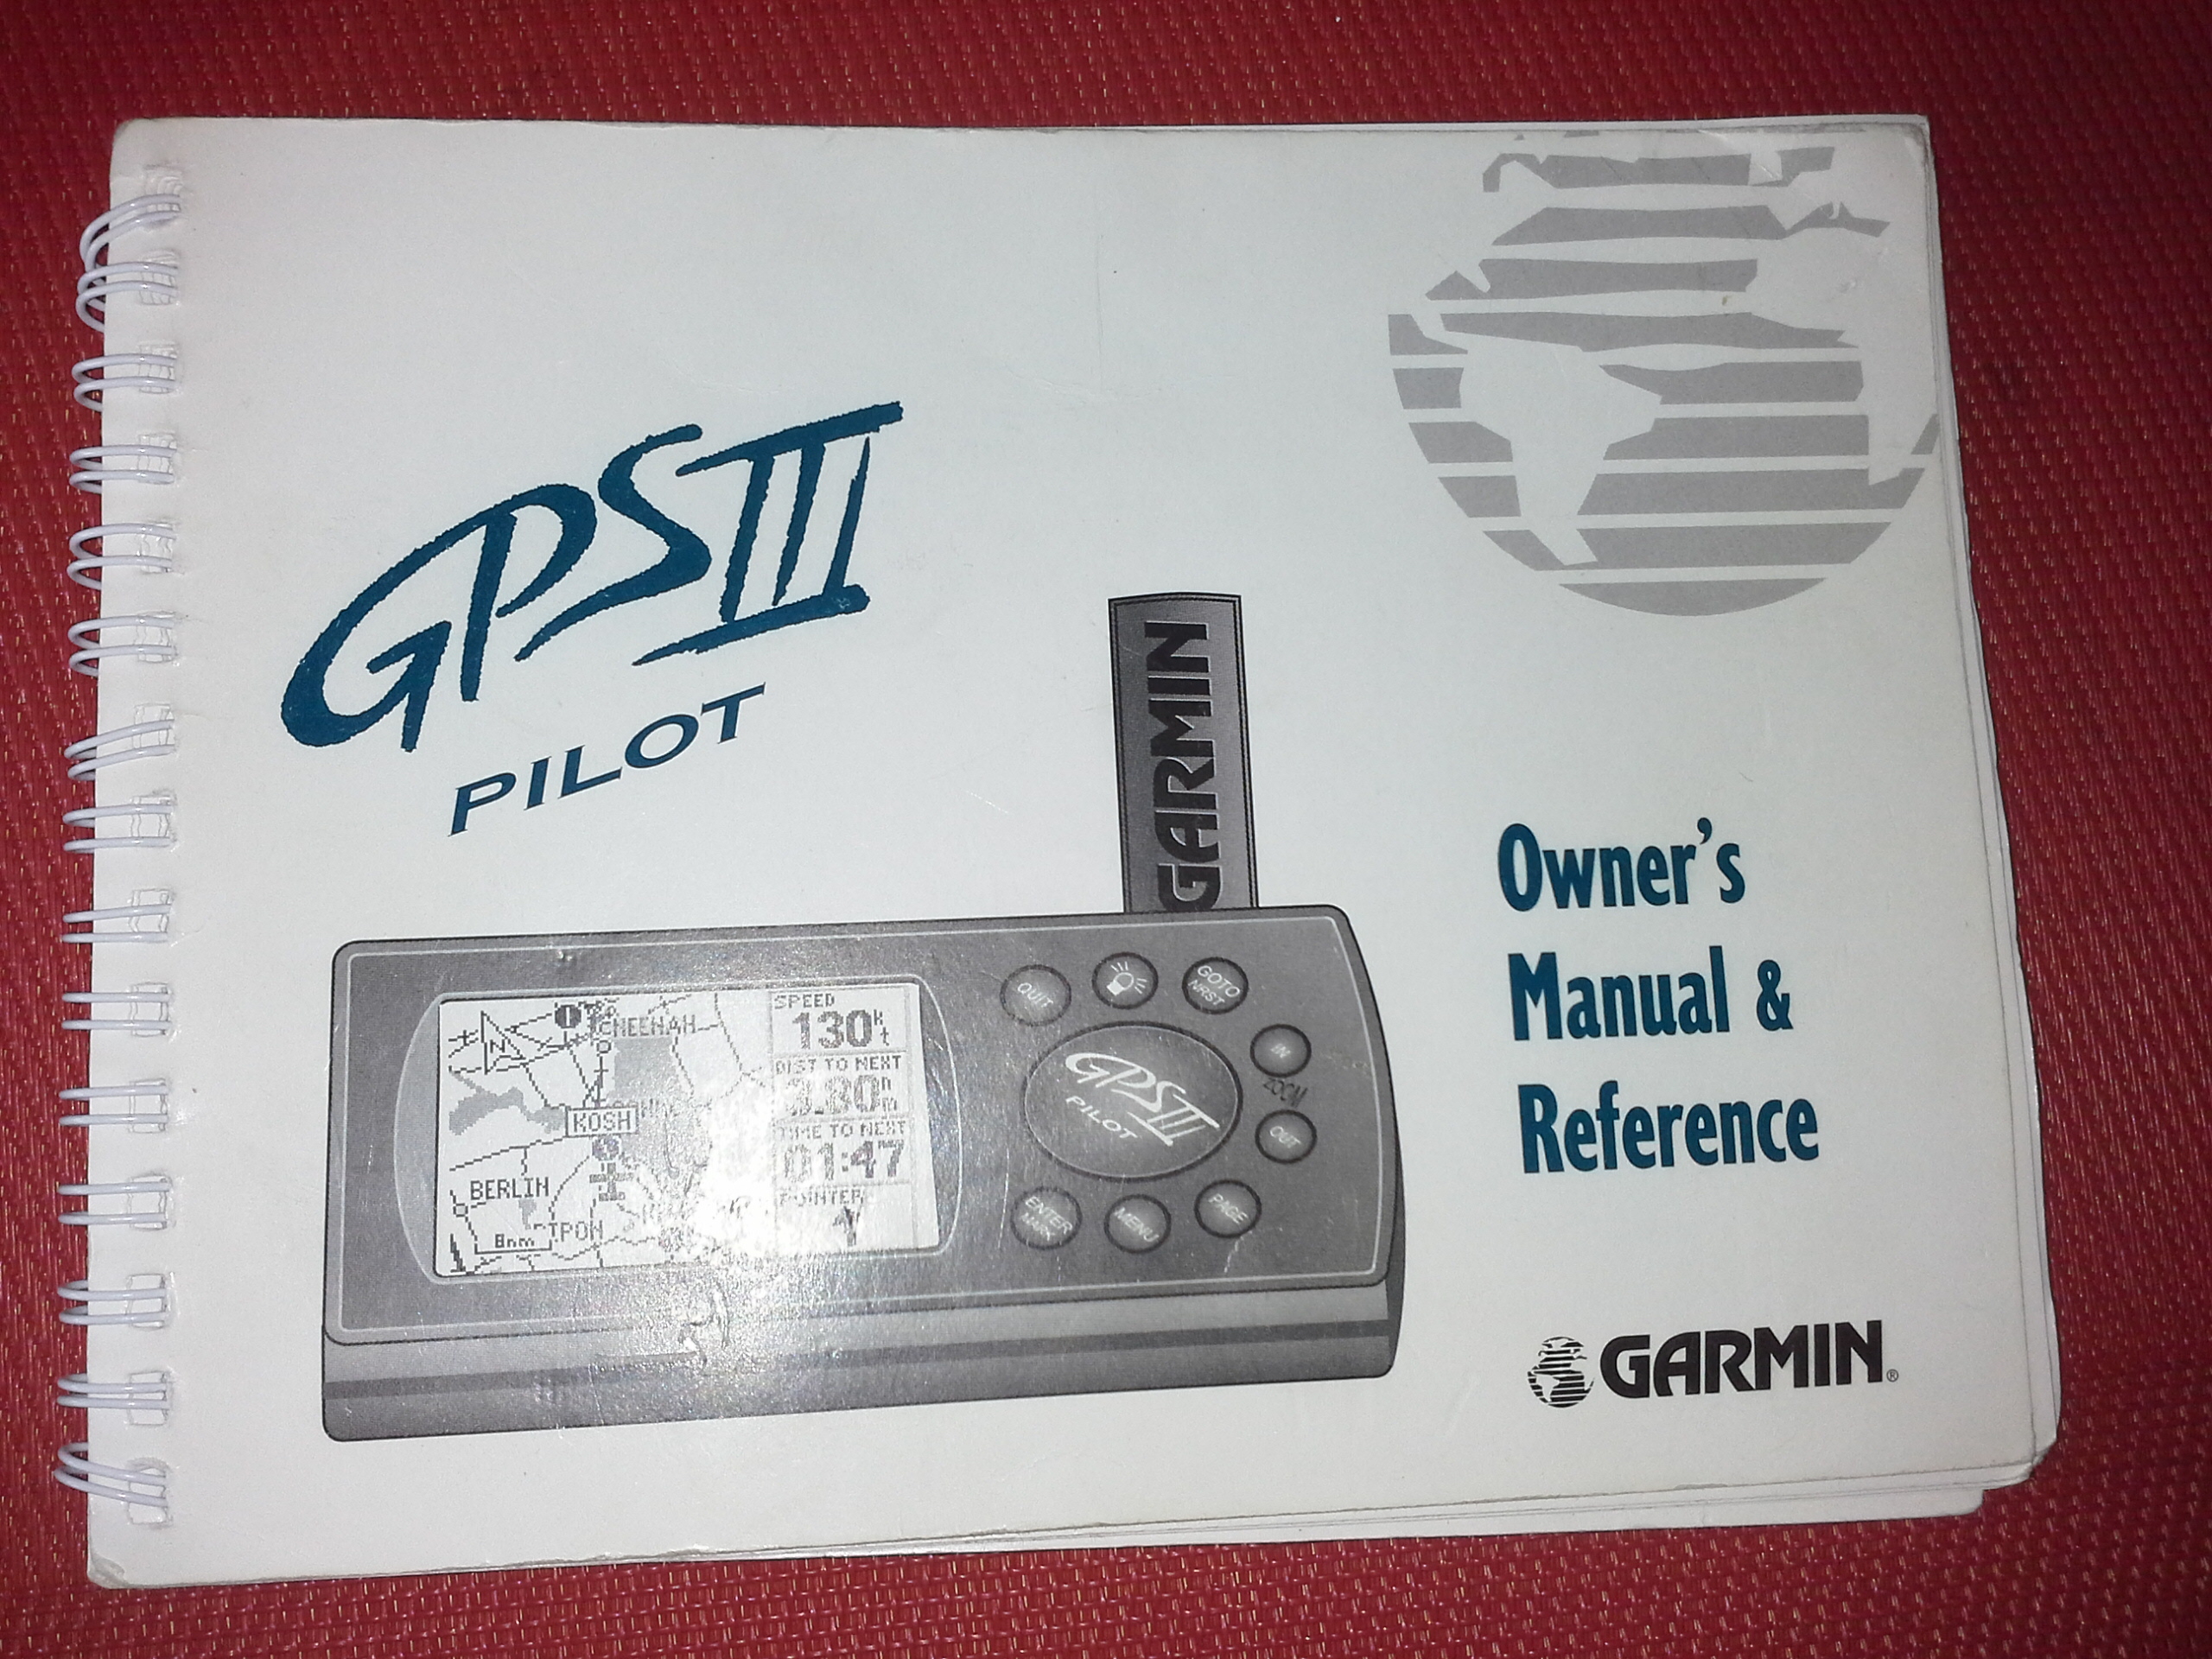 Garmin GPS III Pilot Navigation